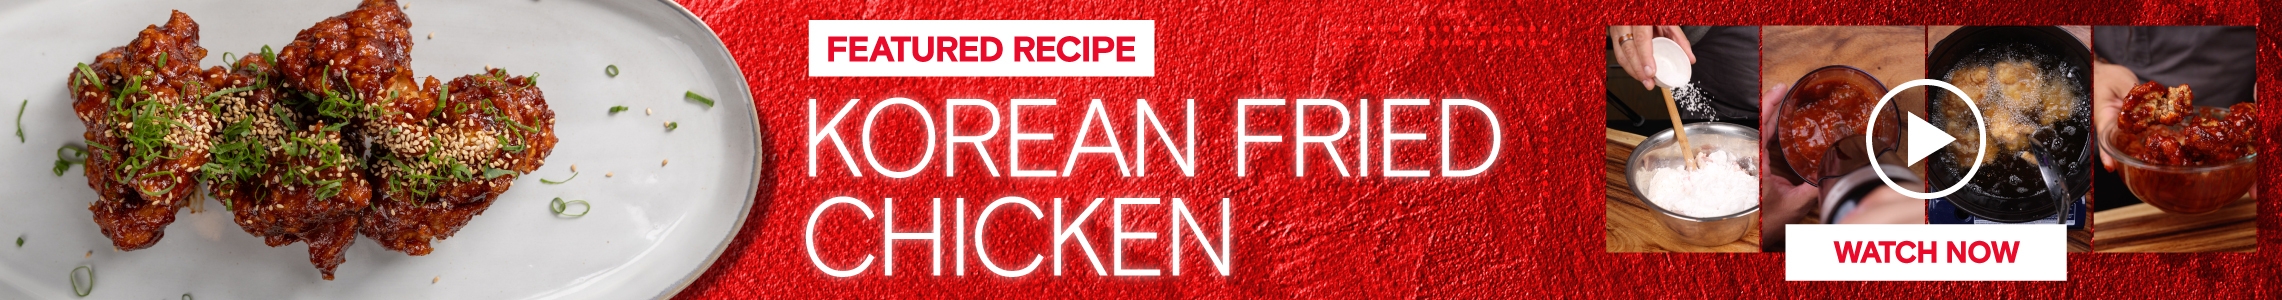 Featured Recipe - Fried Chicken